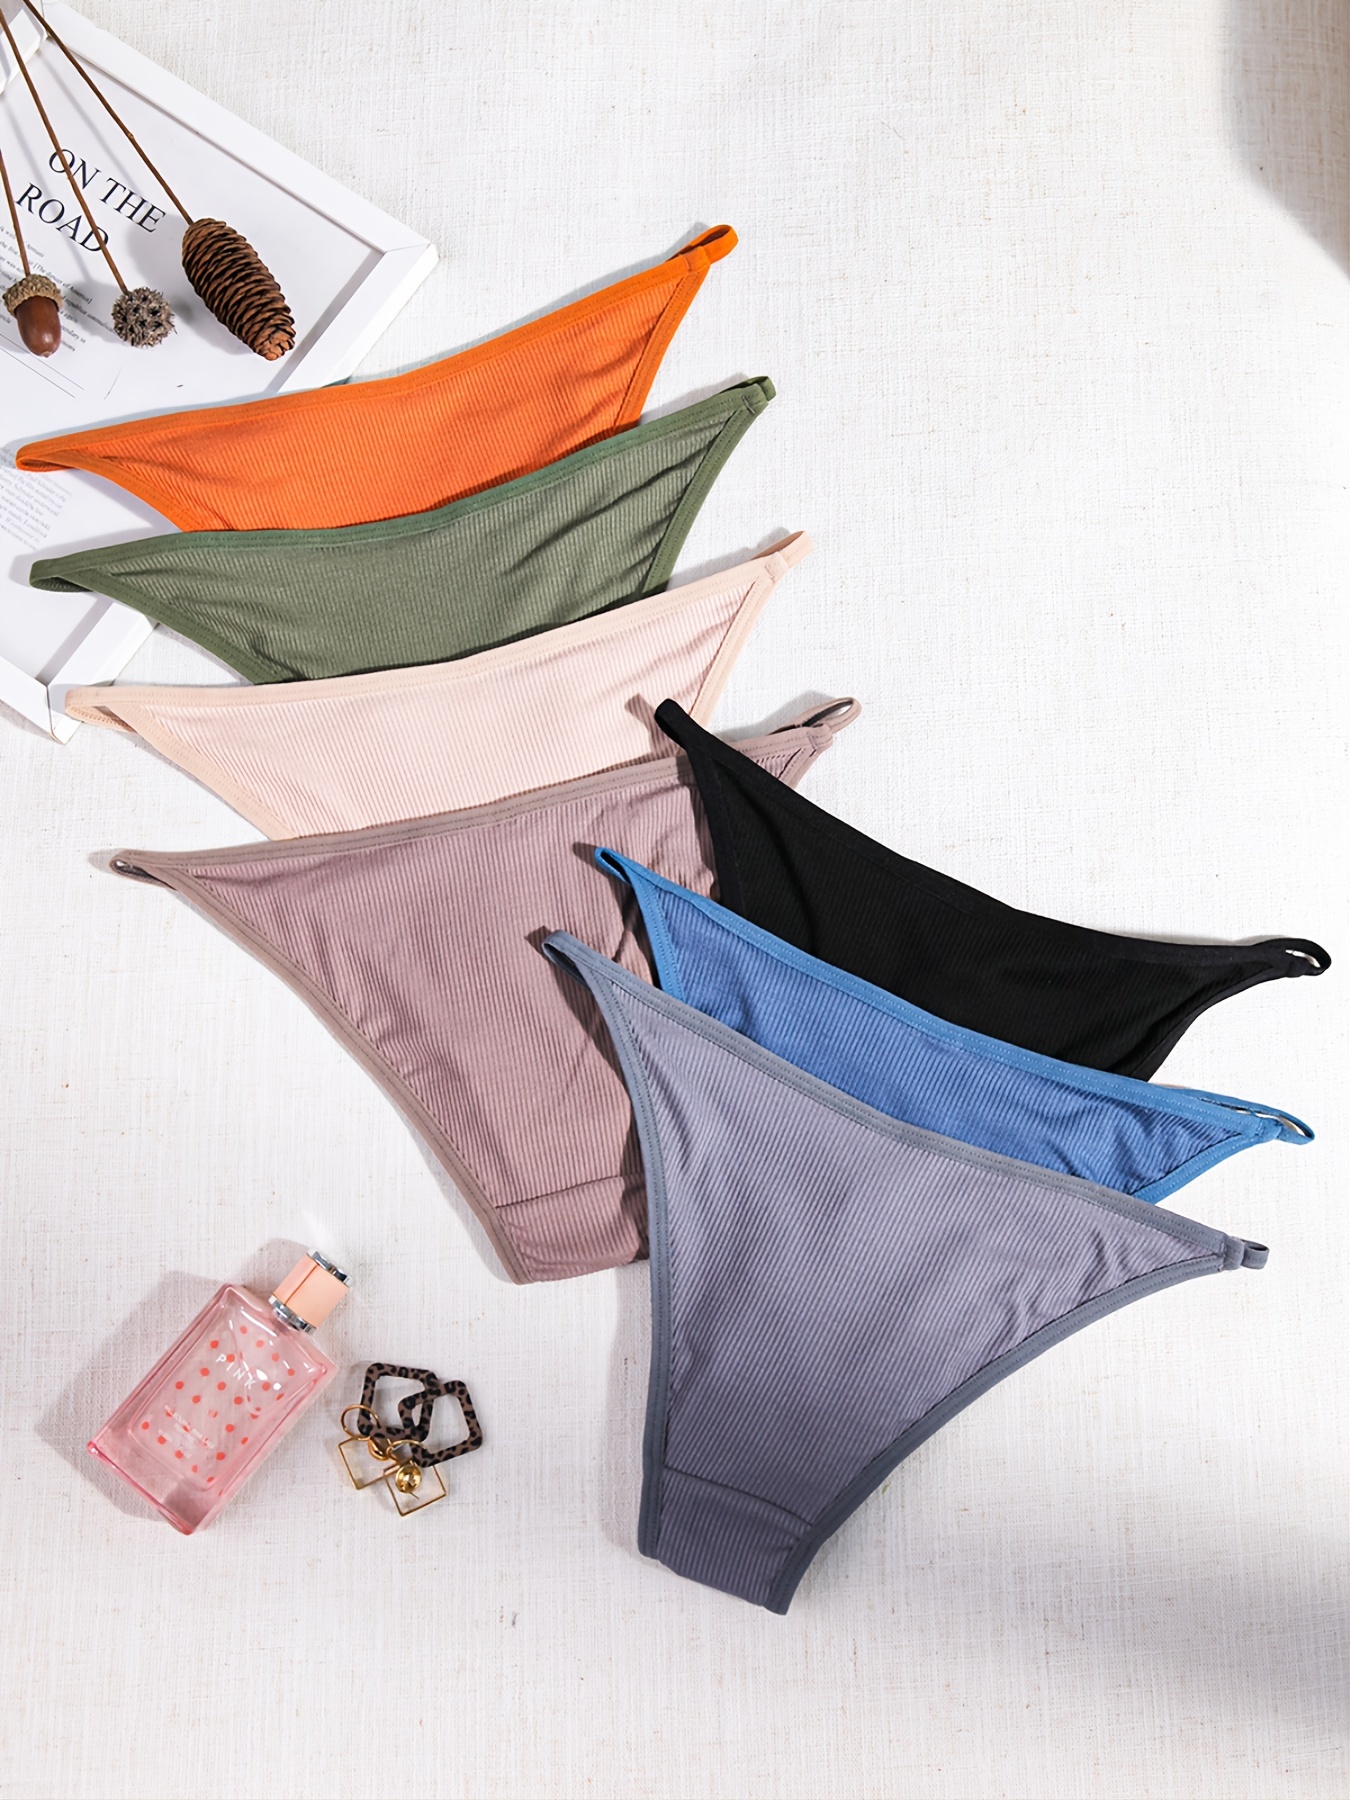 FINETOO 4 Pcs Sexy Cotton Panties Women Underwear Lingerie @ Best